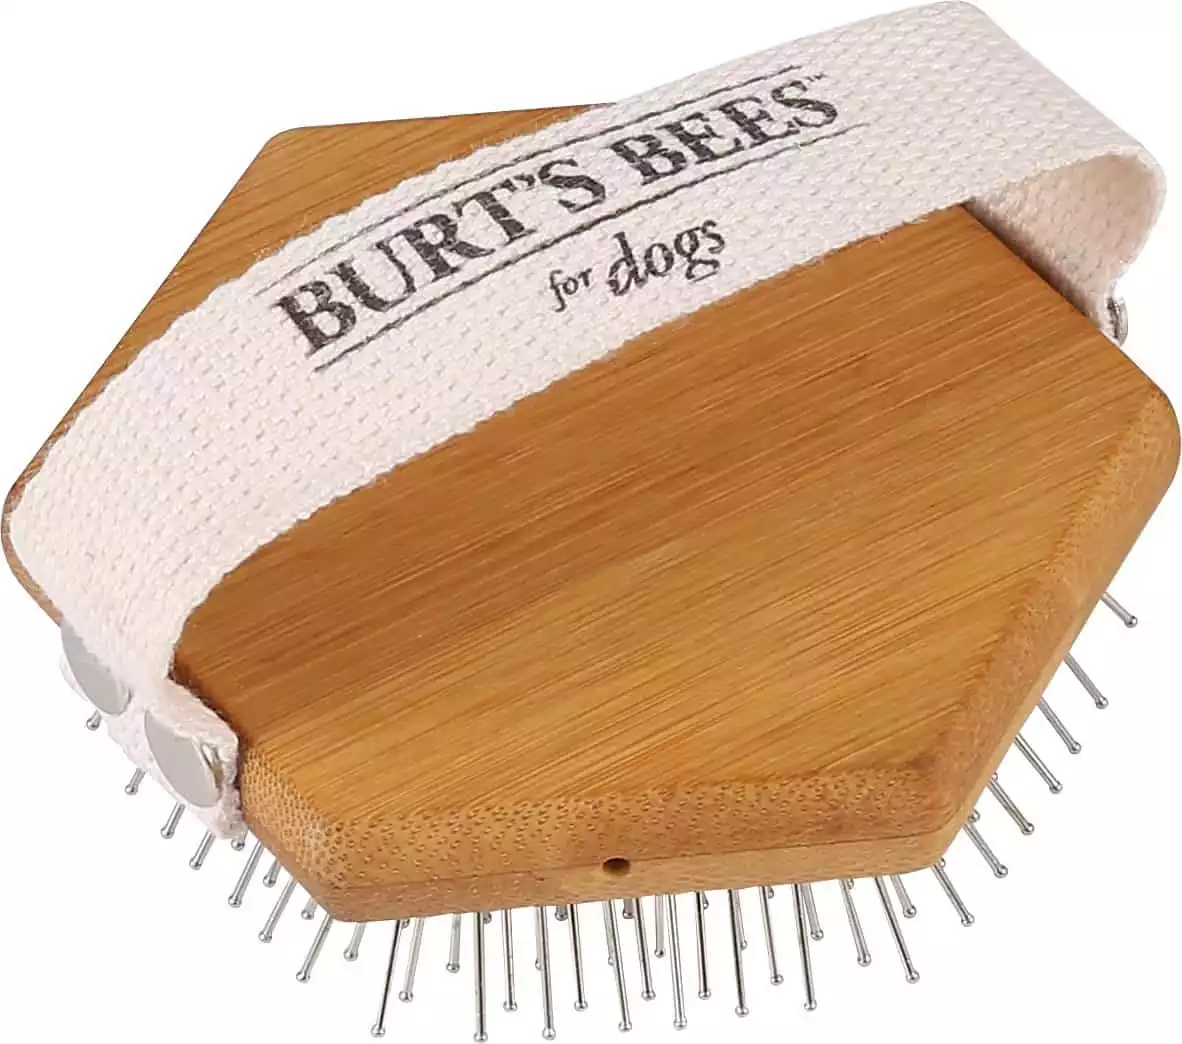 Burt's Bees Palm Detangling Brush